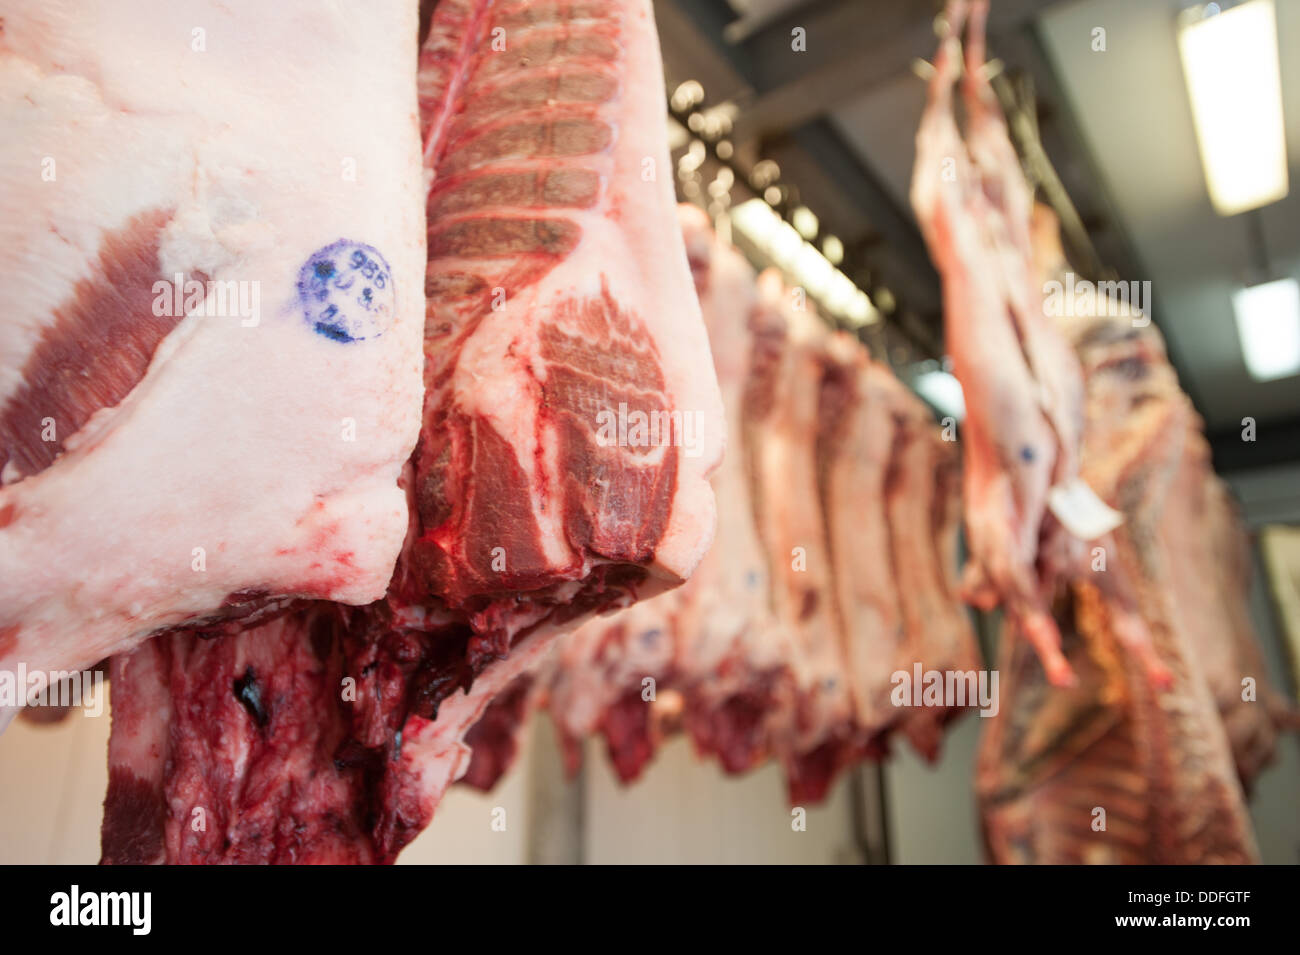 Pork sides in meat locker Stock Photo